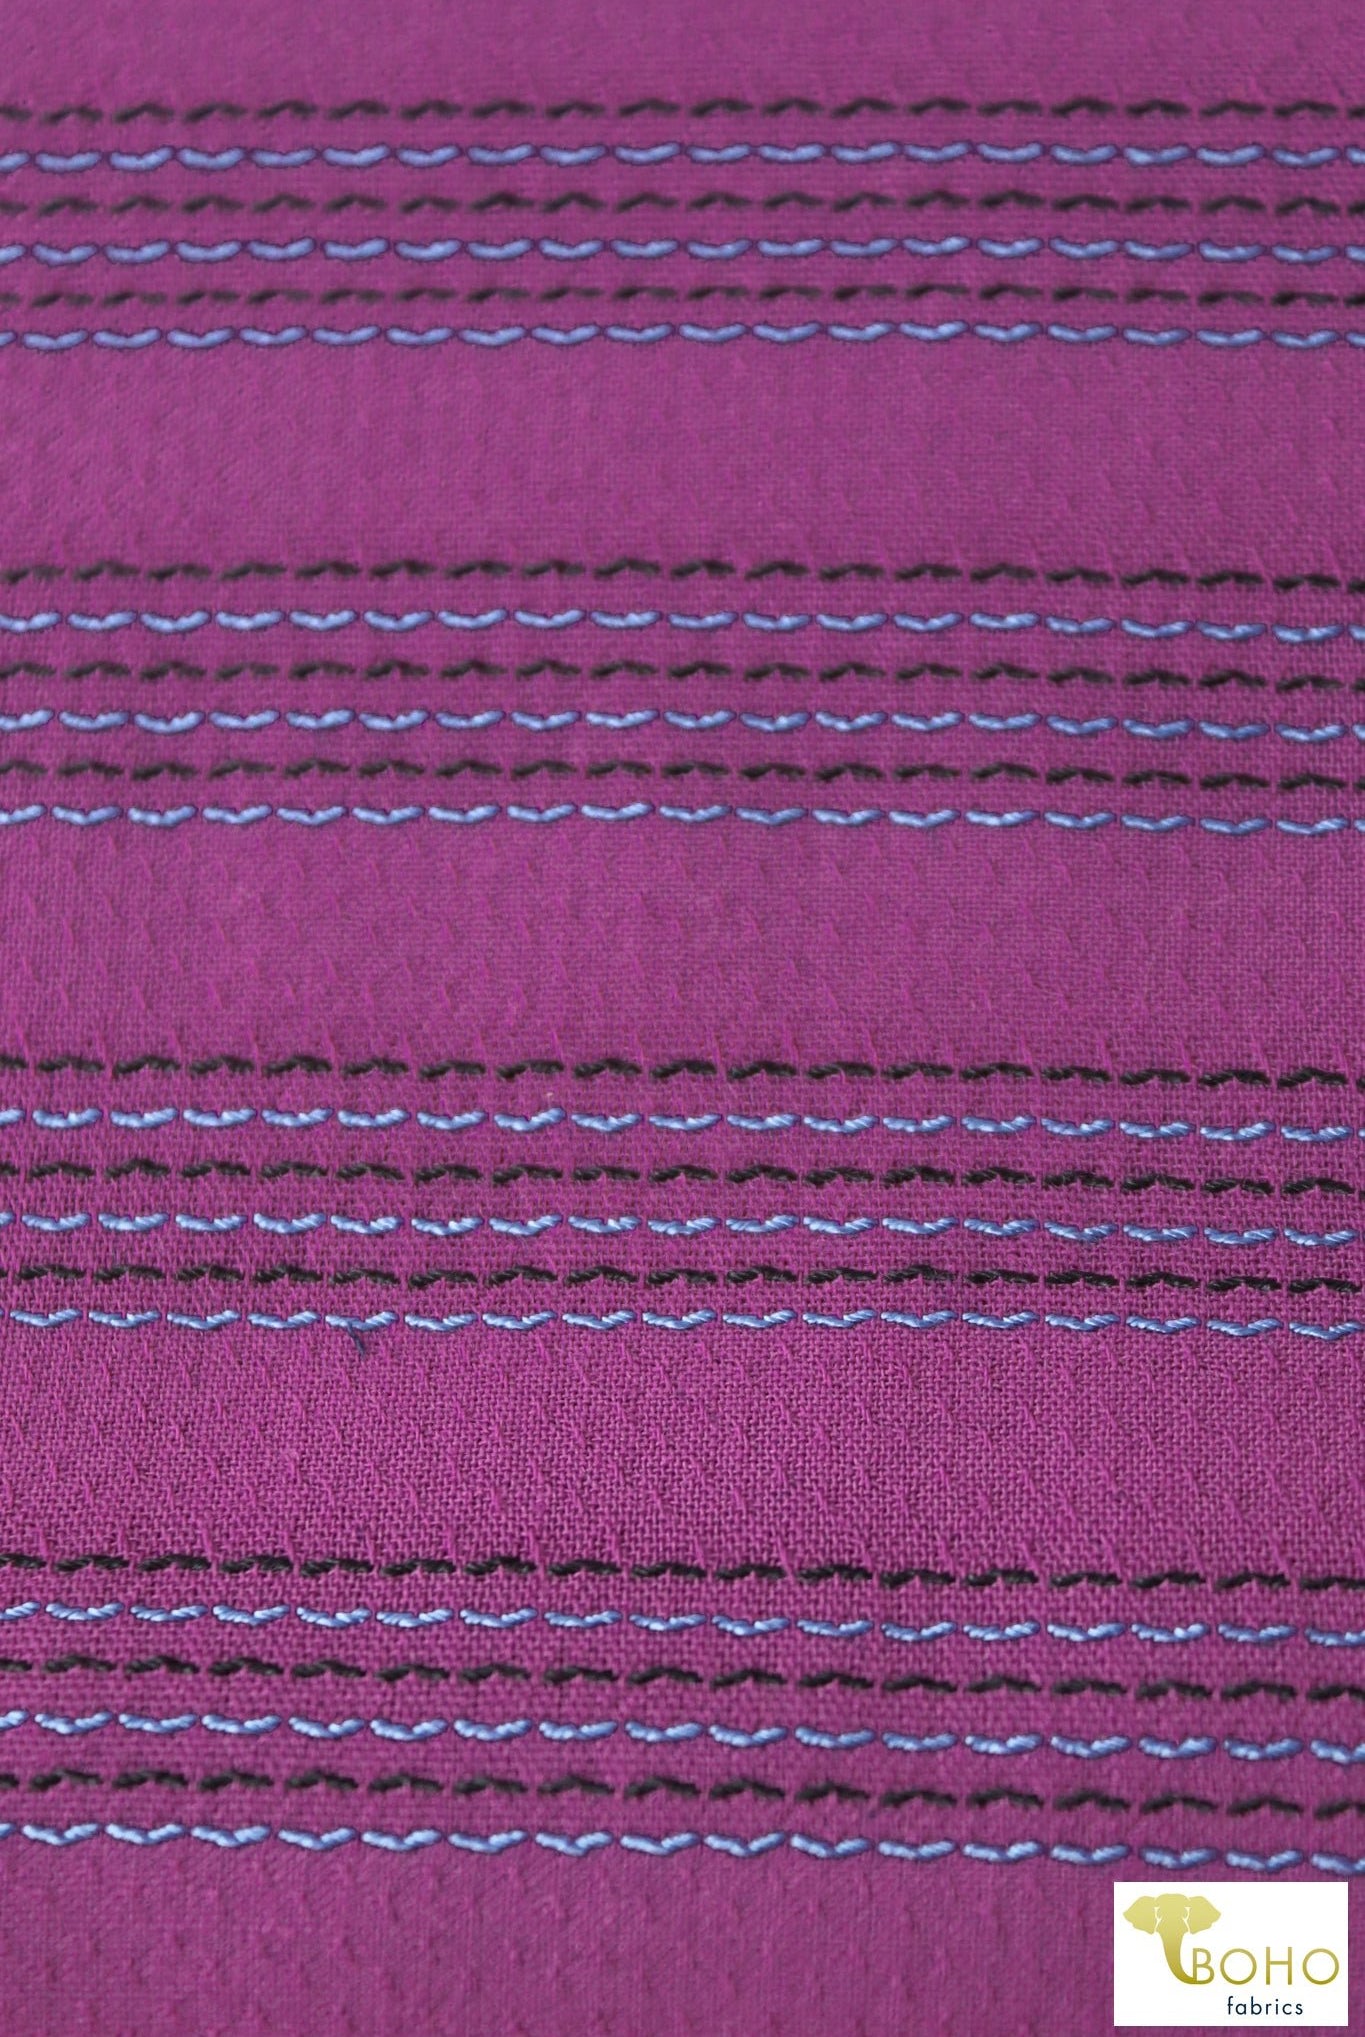 Purple Pacific Coast Highway Stripes. Embroidered Stripes on Purple Woven Fabric. WVS-308-PURP - Boho Fabrics